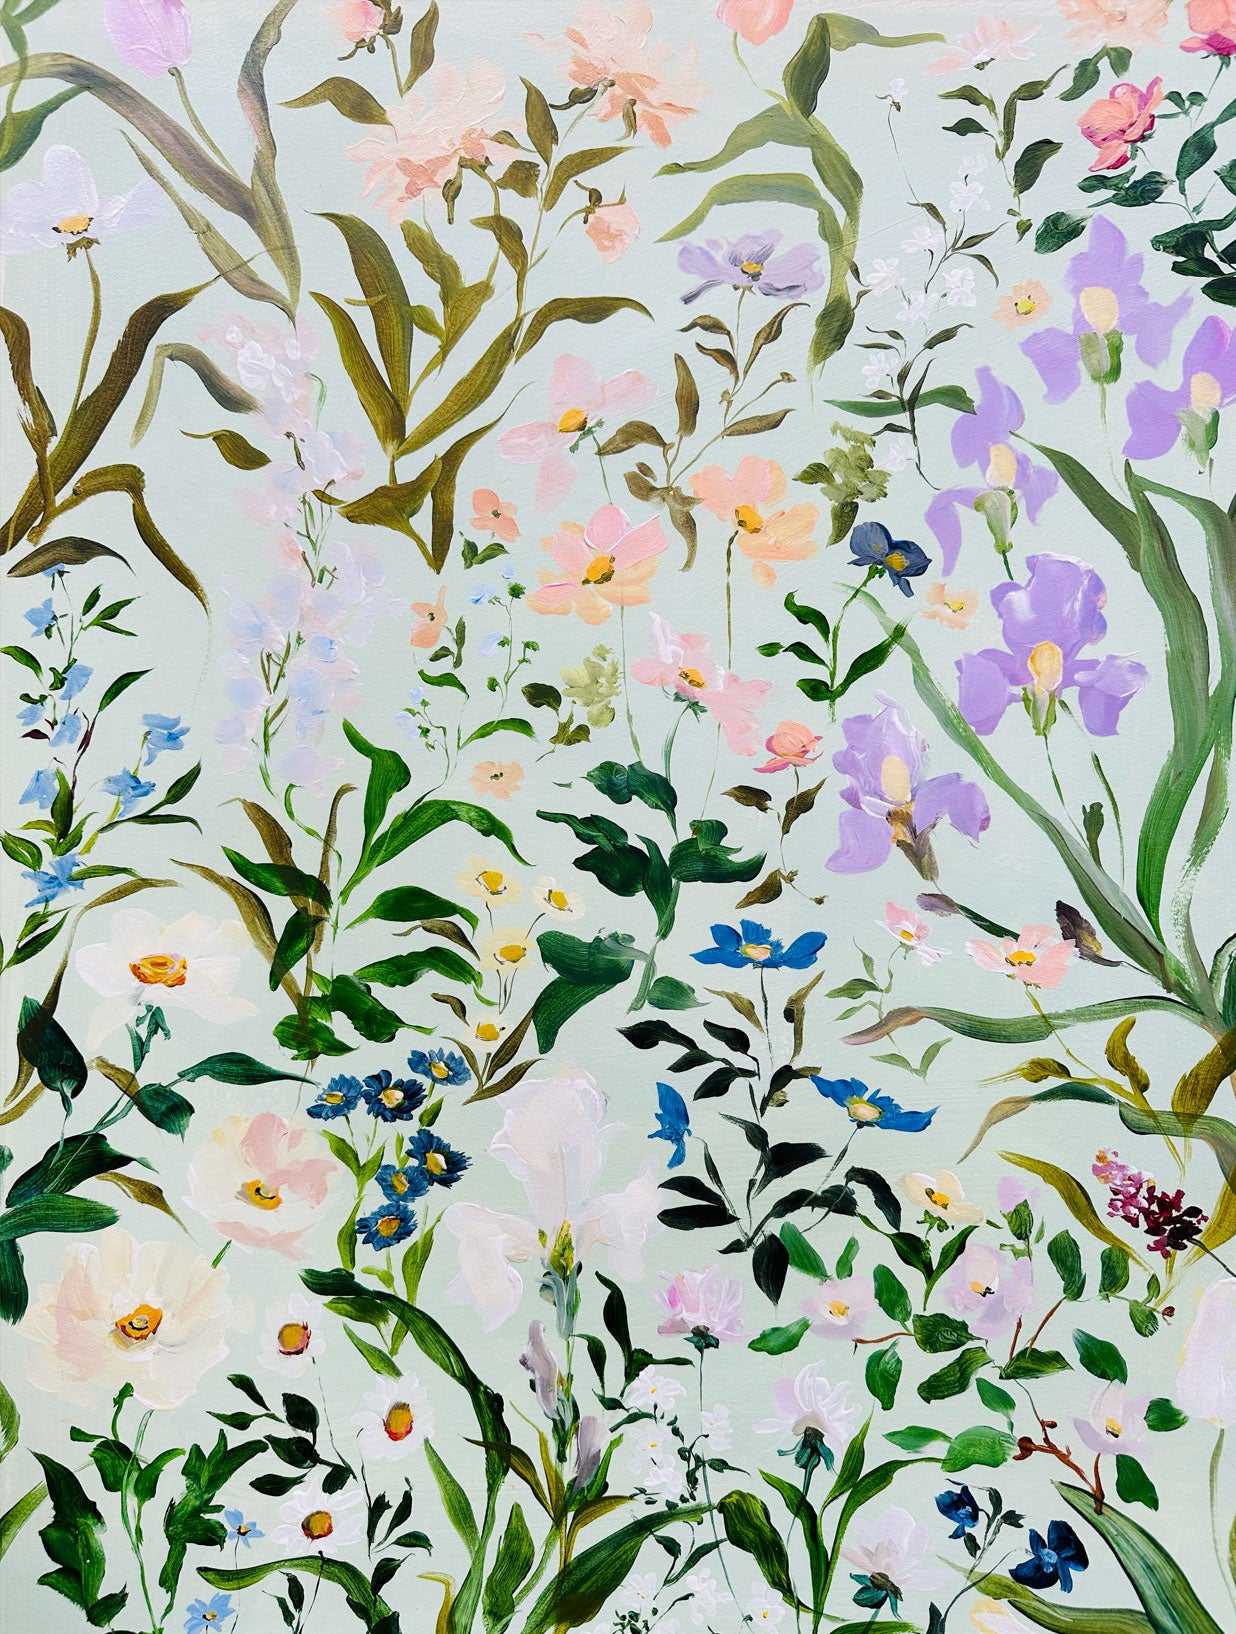 Ophelia's Garden: Acrylic on Paper